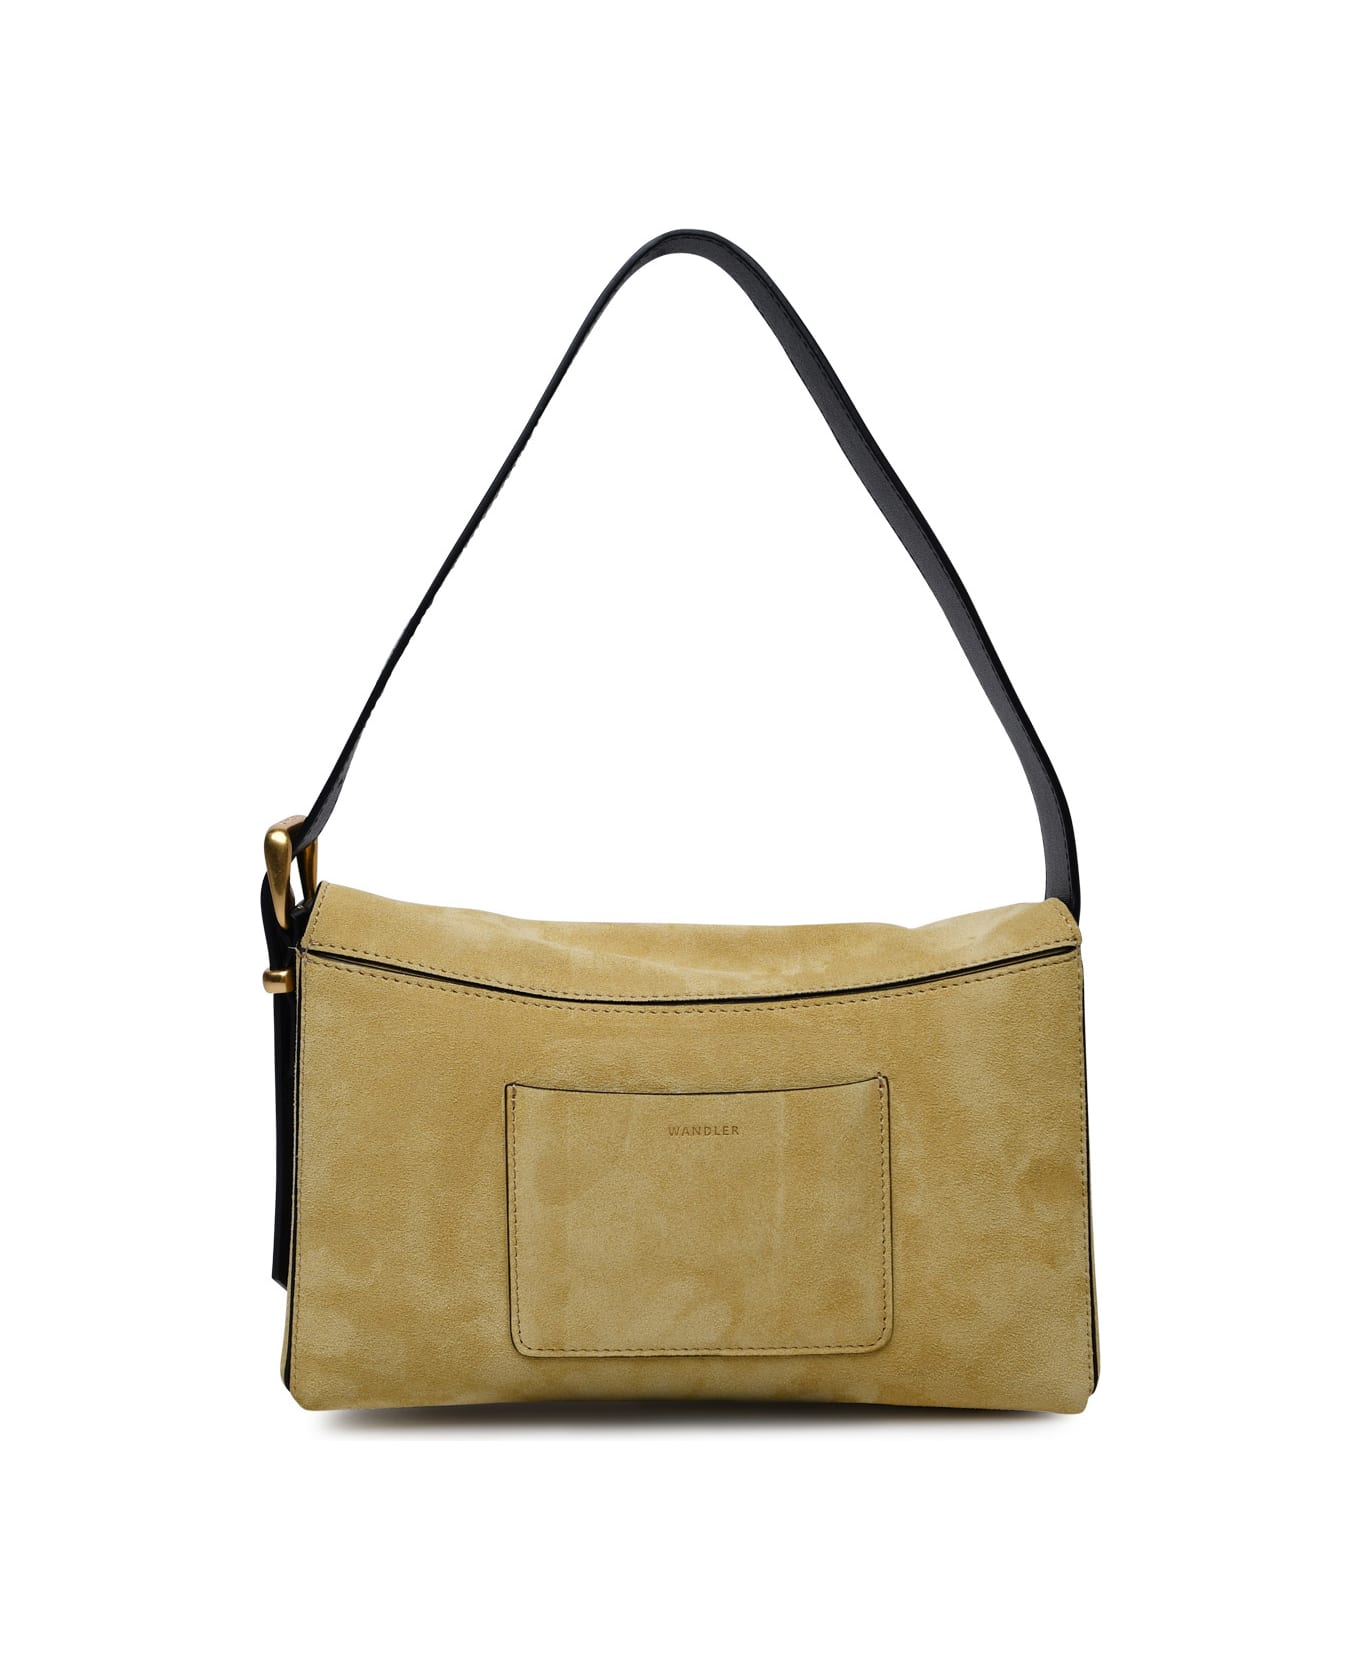 Wandler 'oscar Baguette' Sand Calf Leather Bag - Beige トートバッグ